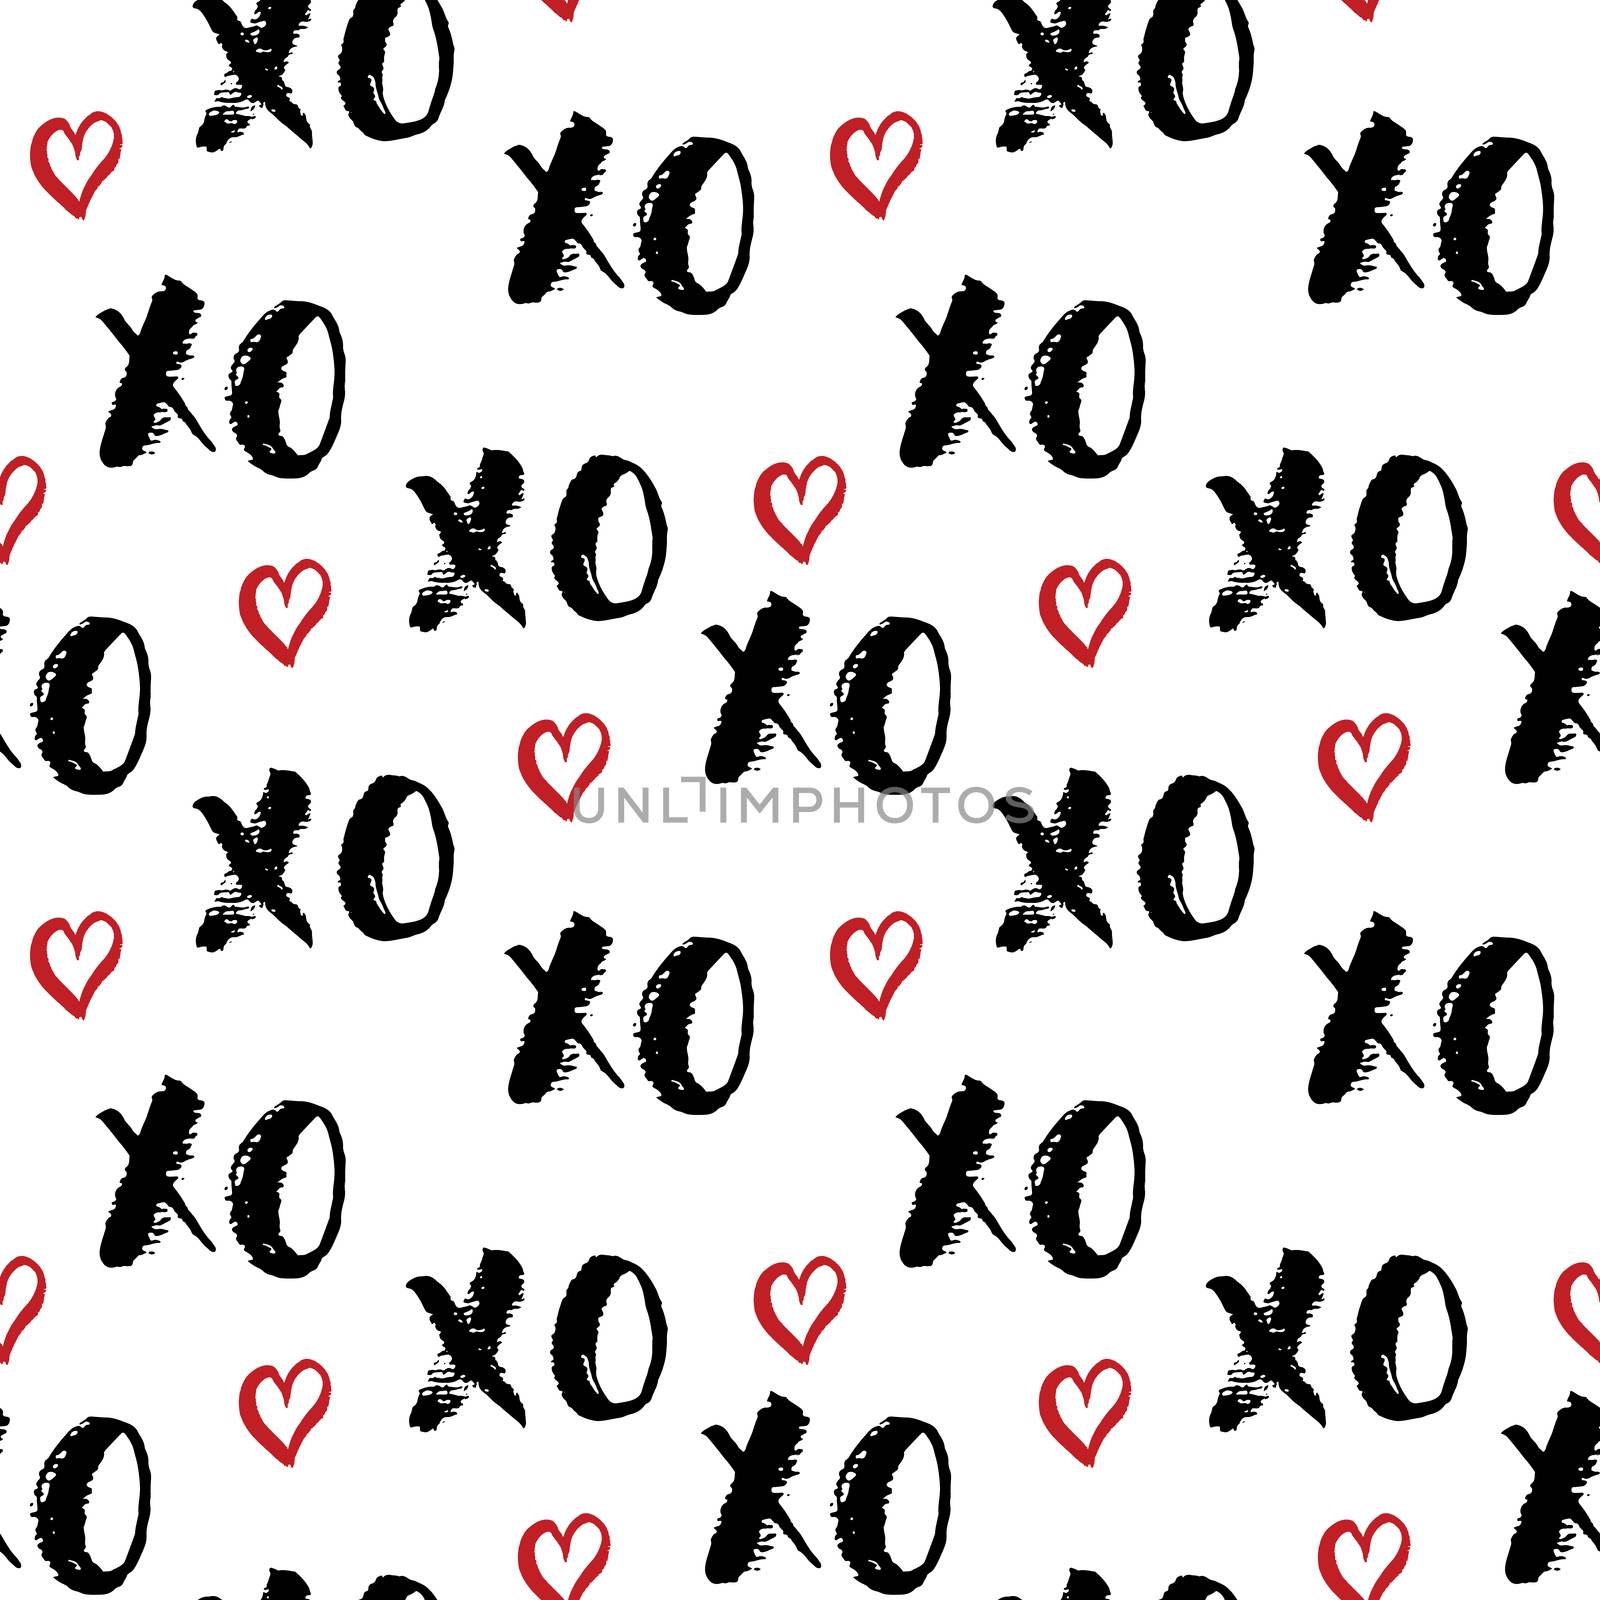 XOXO brush lettering signs seamless pattern, Grunge calligraphic hugs and kisses Phrase, Internet slang abbreviation XOXO symbols, vector illustration